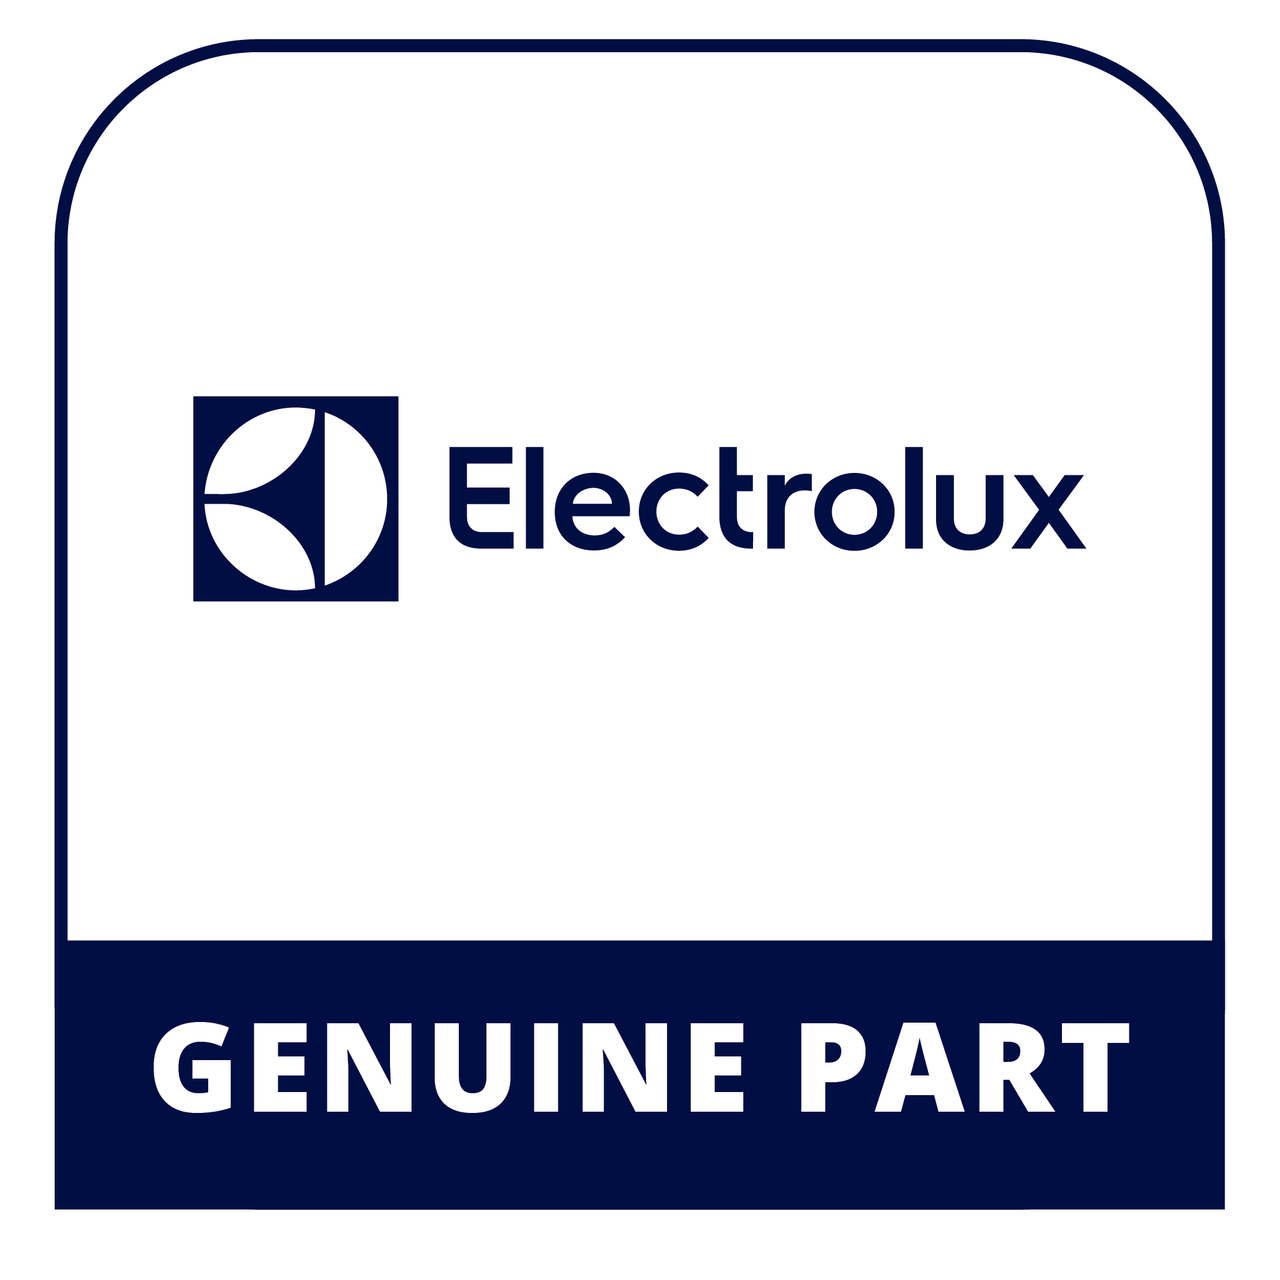 Frigidaire - Electrolux 5304506469 - Handle Set White - Genuine Electrolux Part